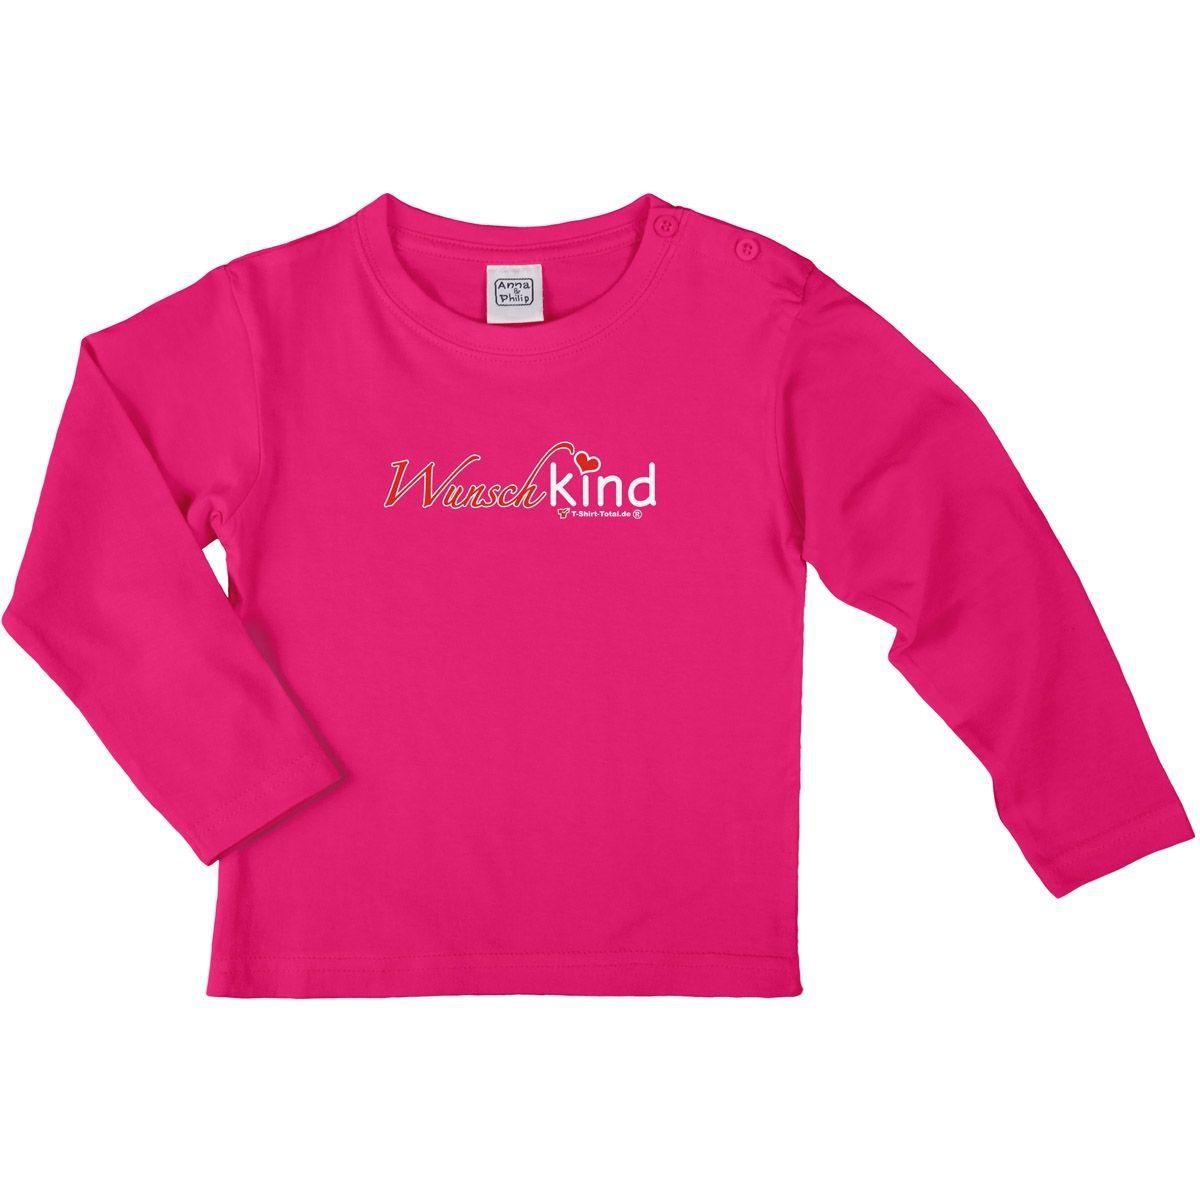 Wunschkind Kinder Langarm Shirt pink 56 / 62